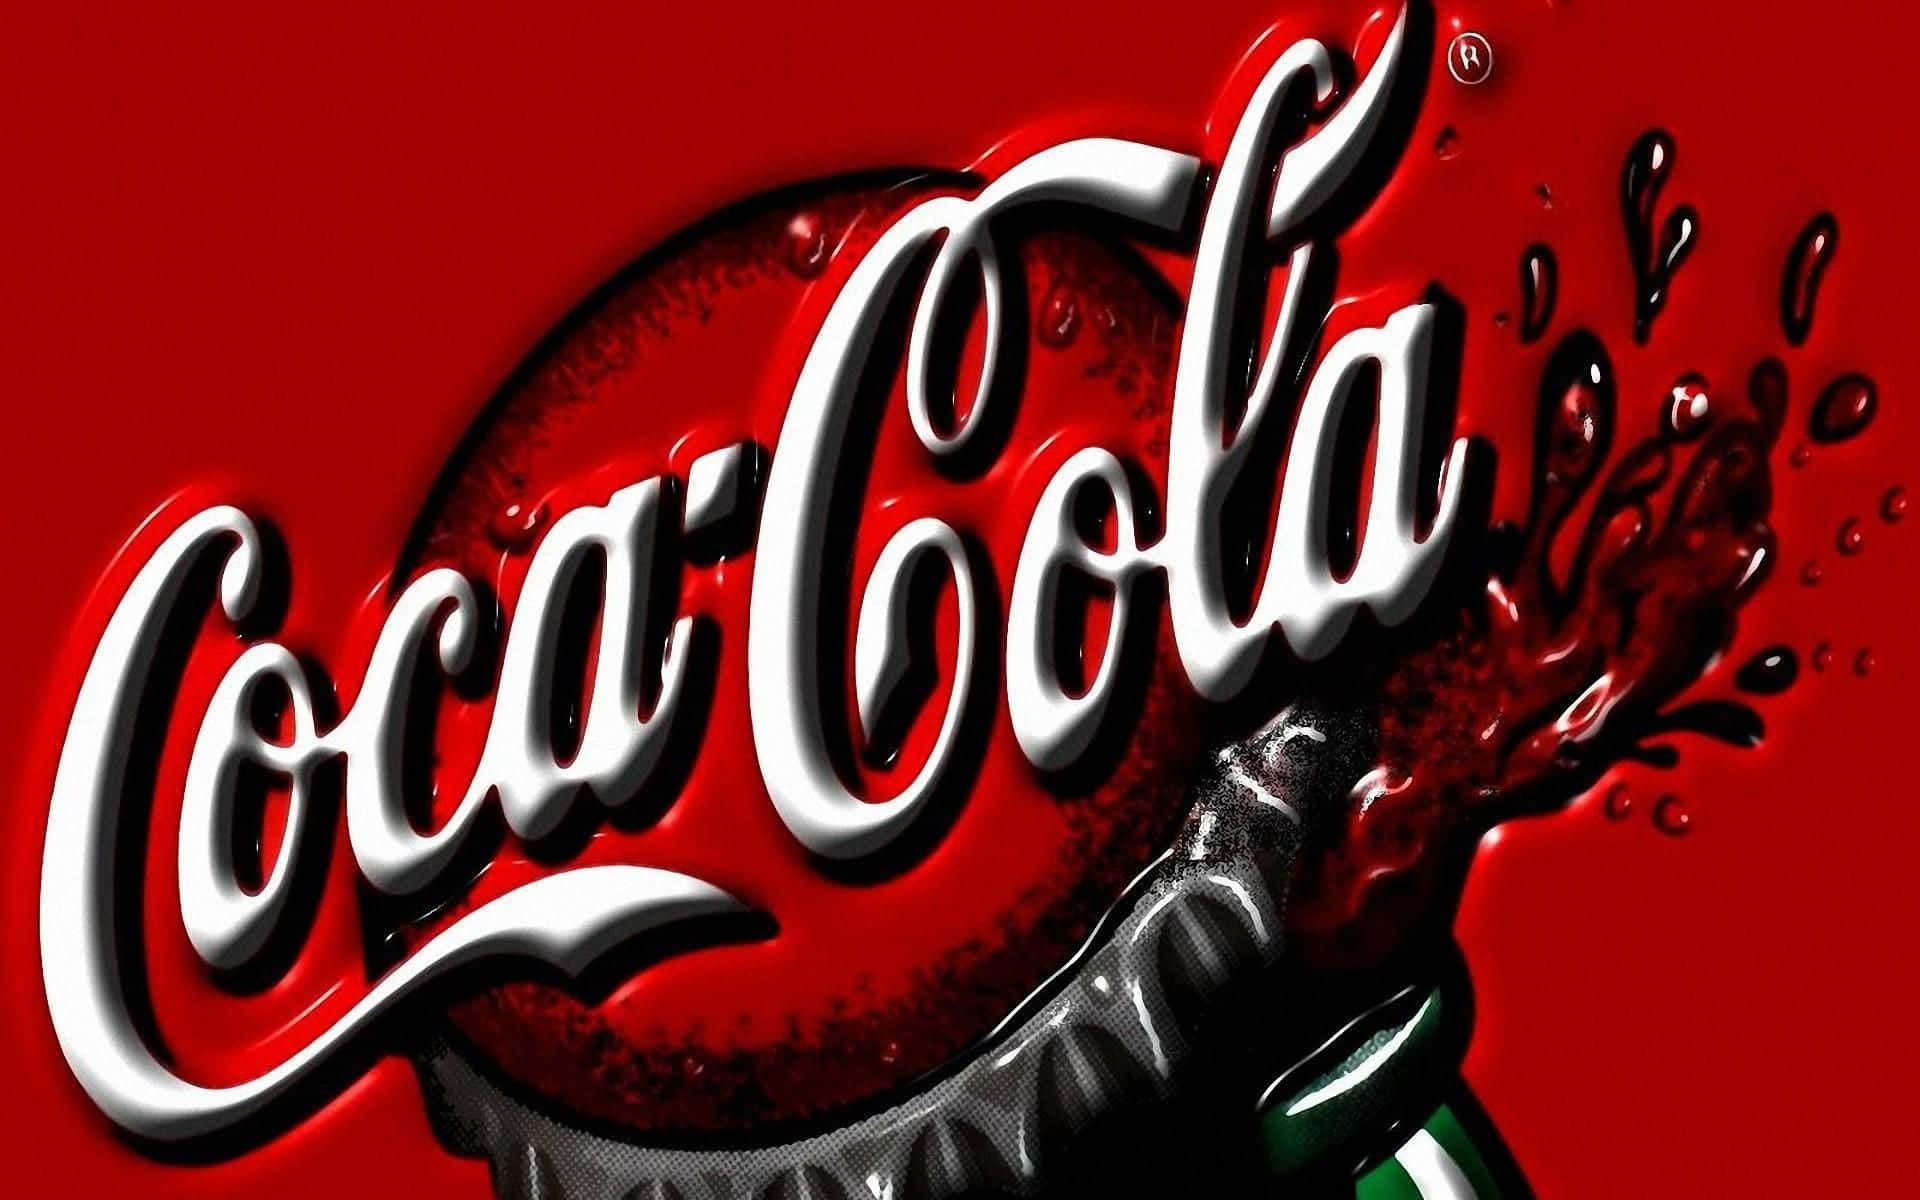 Free Coca Cola Wallpaper Downloads, [100+] Coca Cola Wallpapers for FREE |  